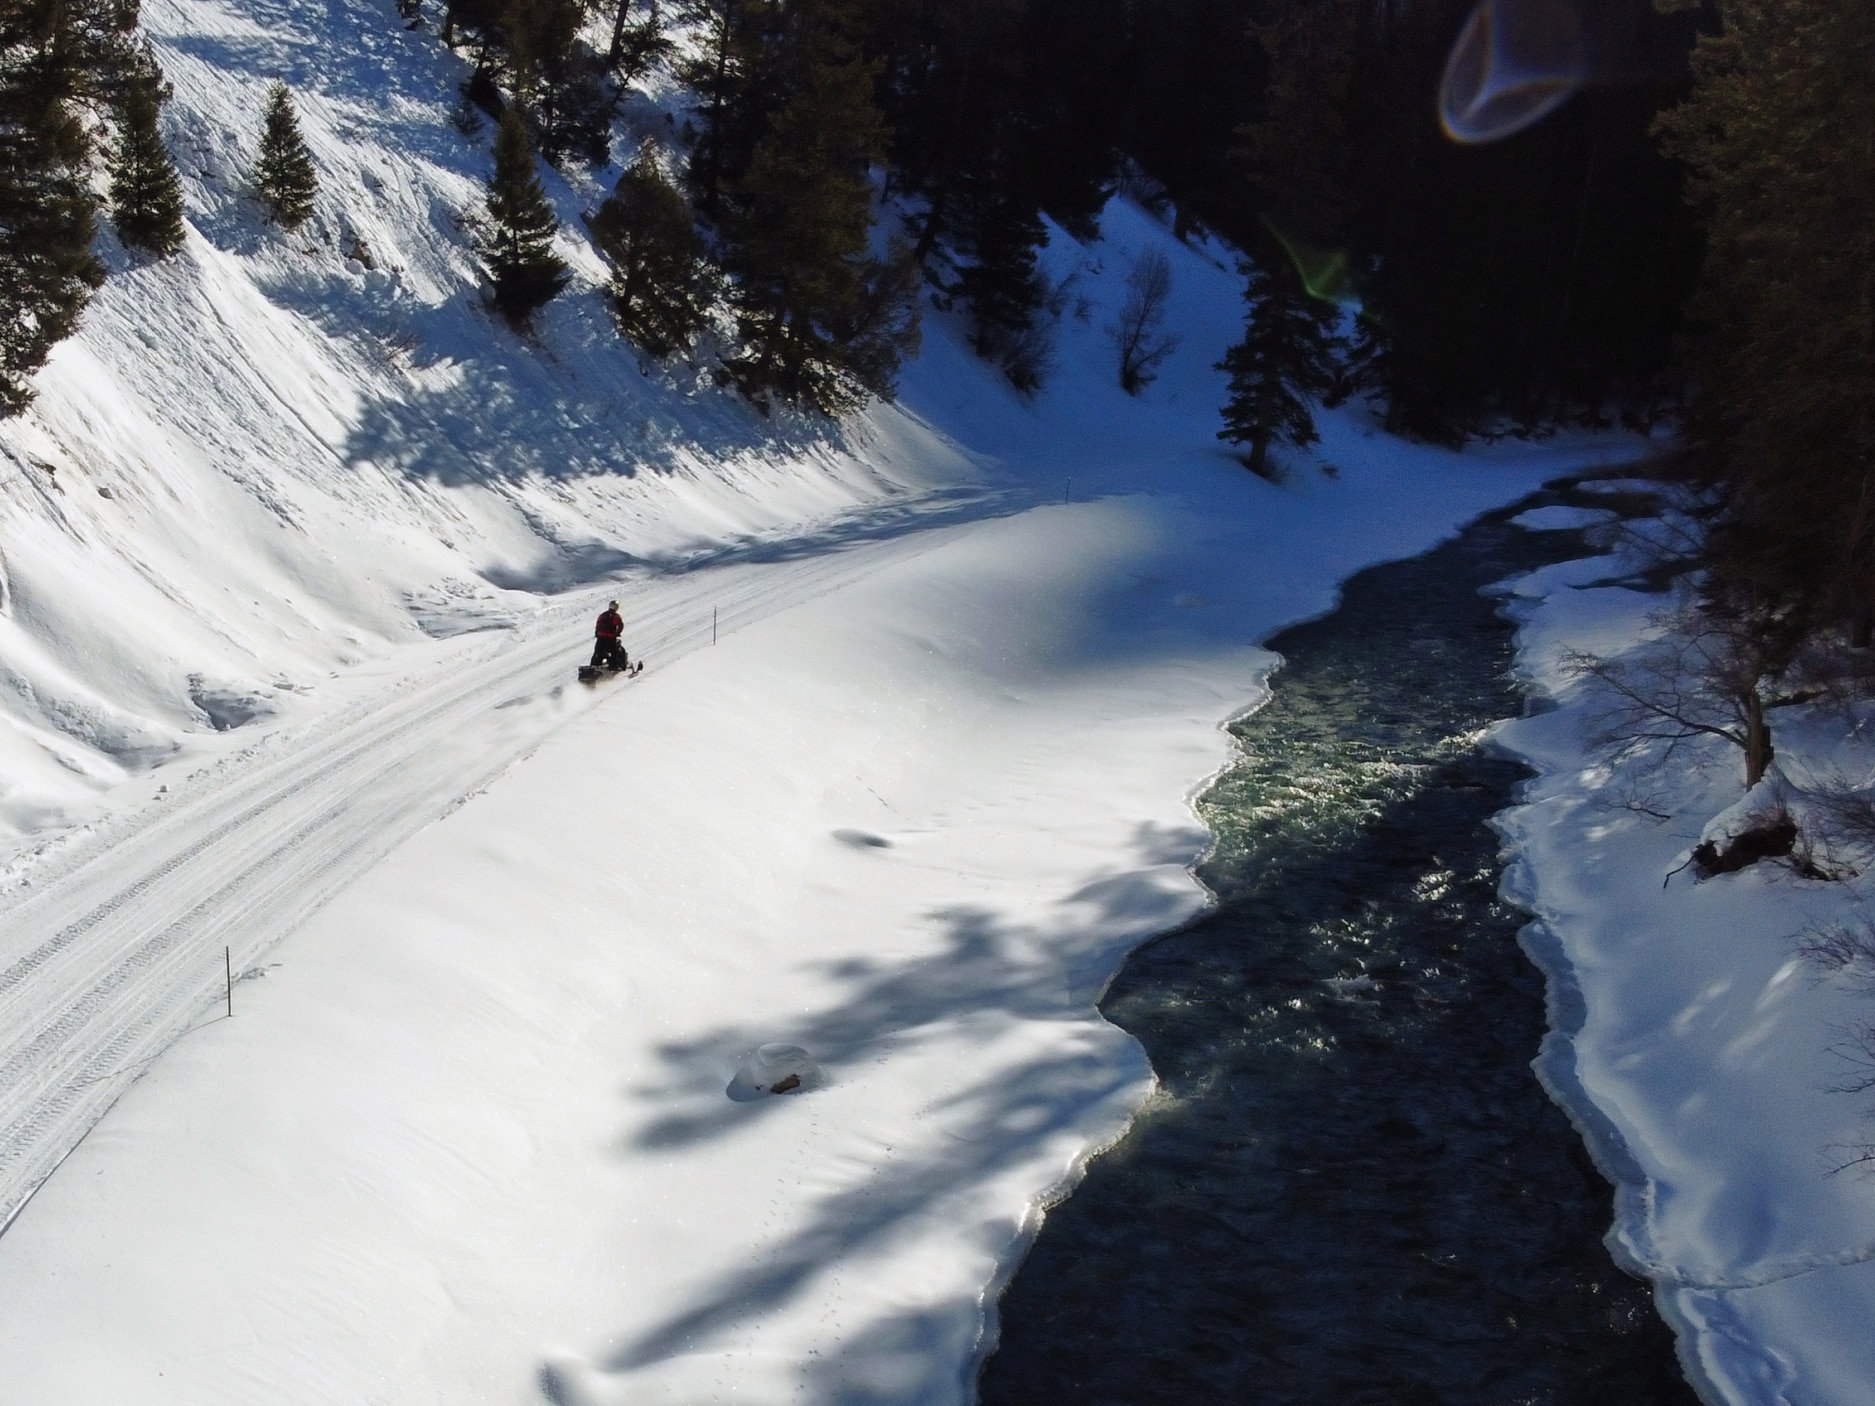 Scenic Ski-Doo backcountry touring in Alpine, WY